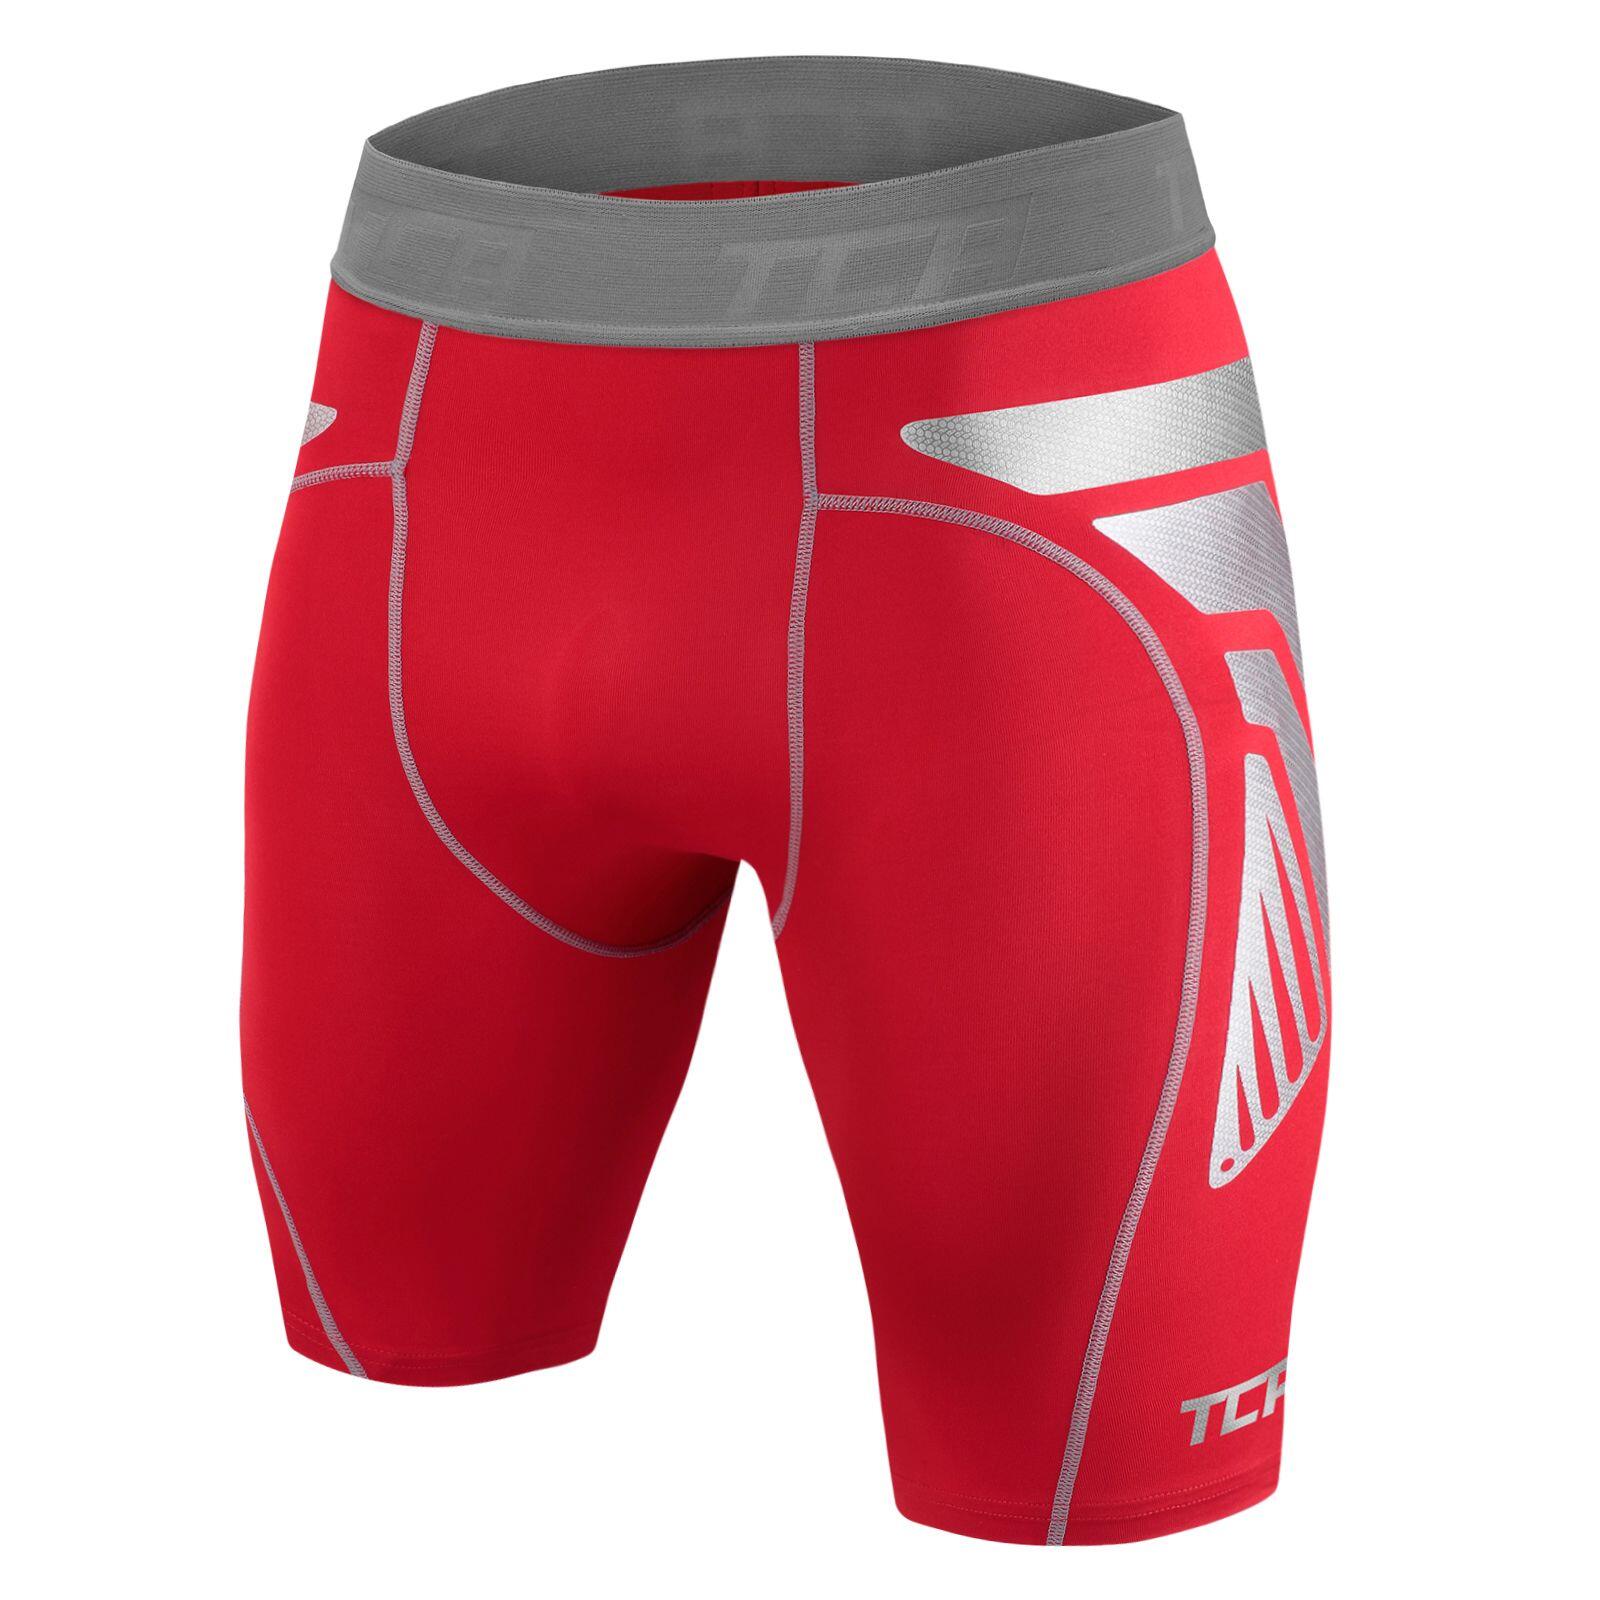 TCA Men's CarbonForce Quick Dry Base Layer Compression Shorts - Team Red